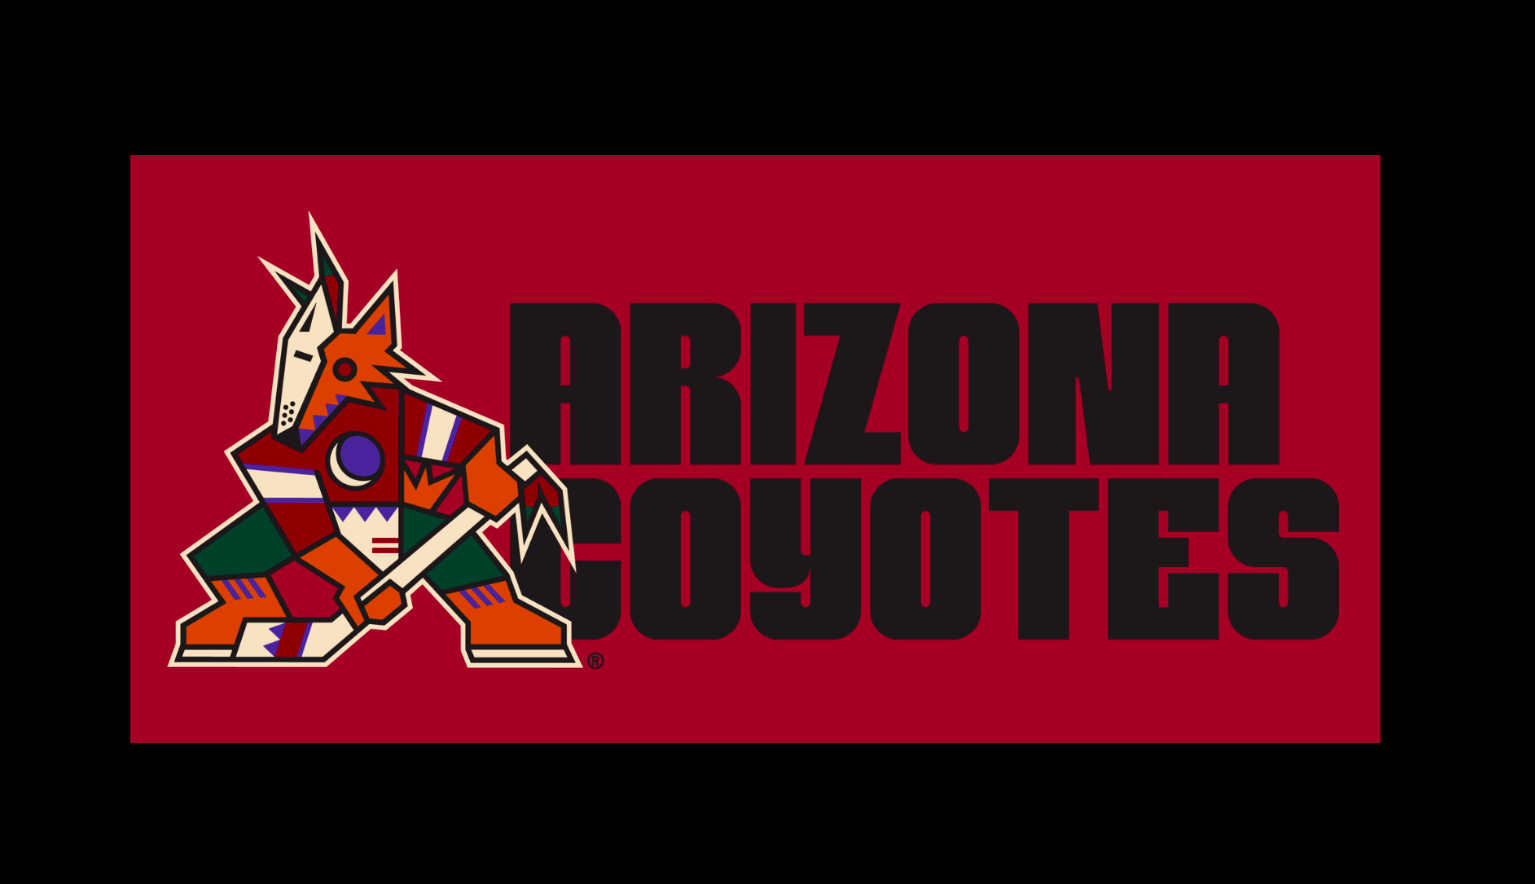 Arizona coyotes